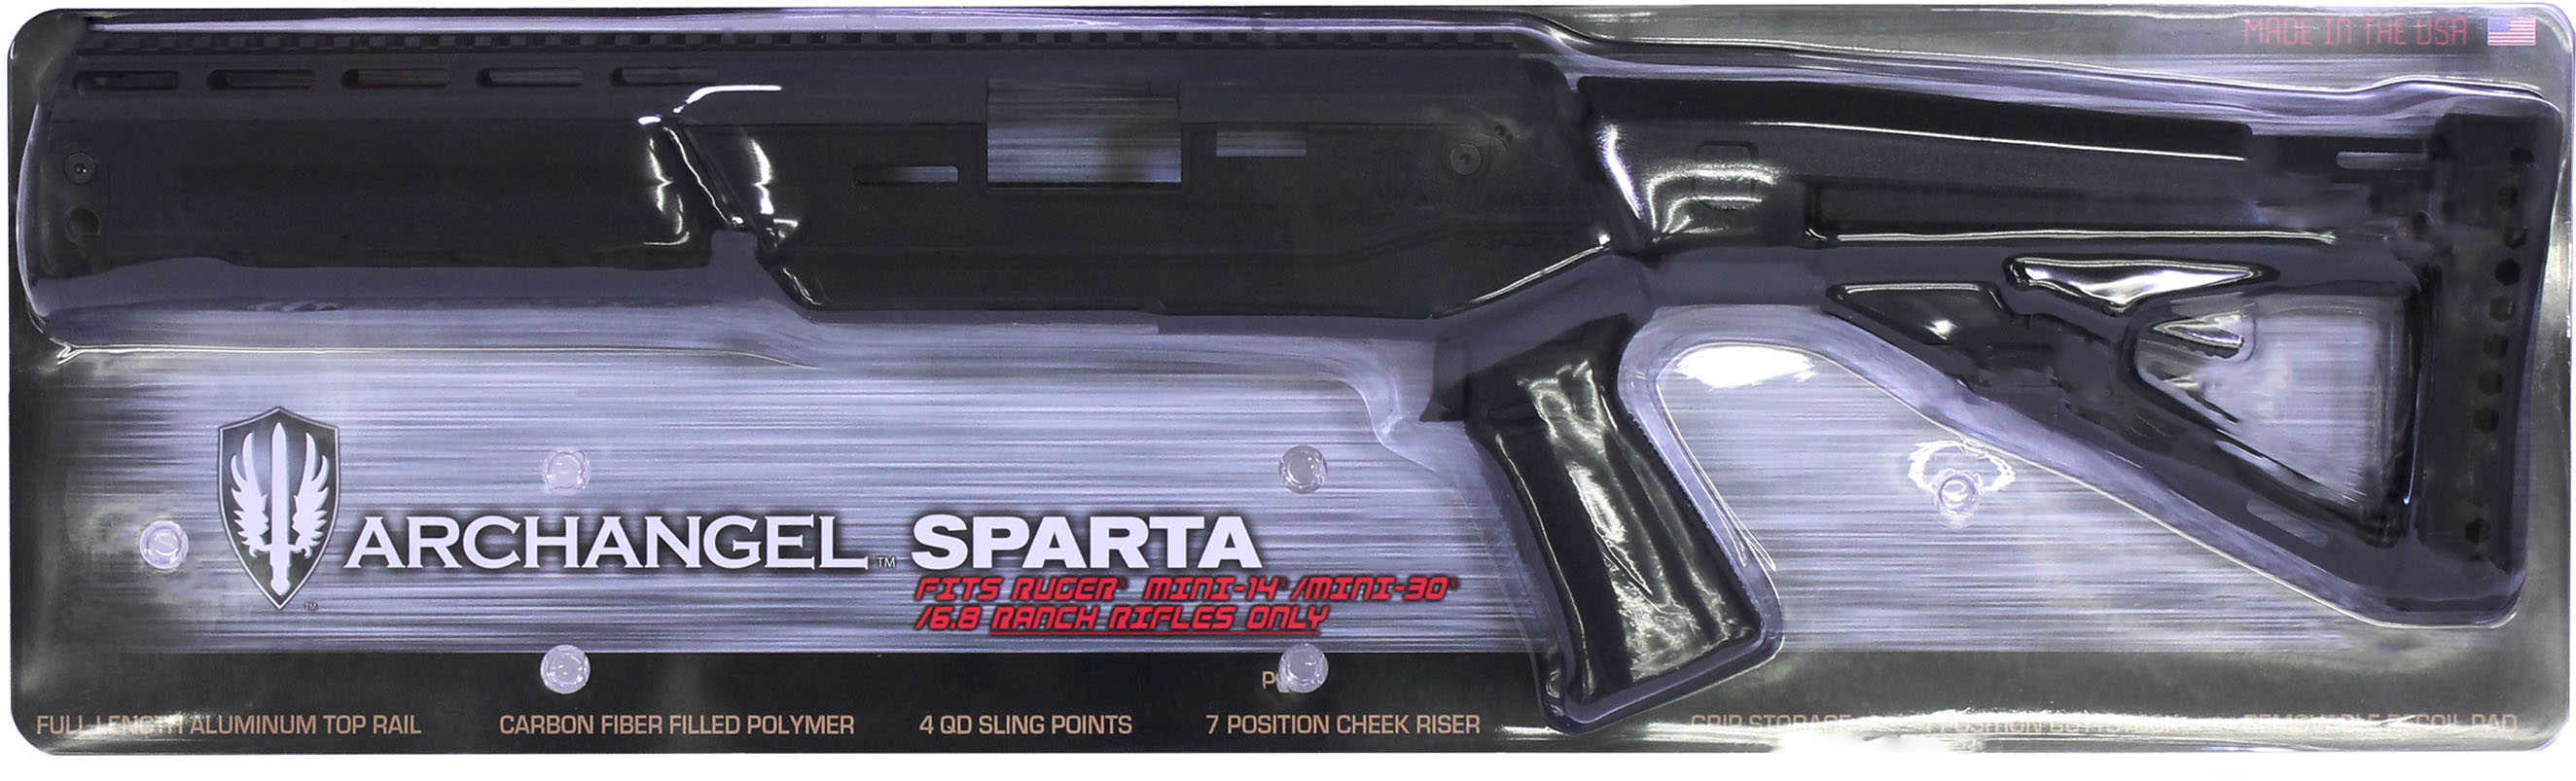 Promag Archangel Sparta Pistol Grip Conversion Stock Black